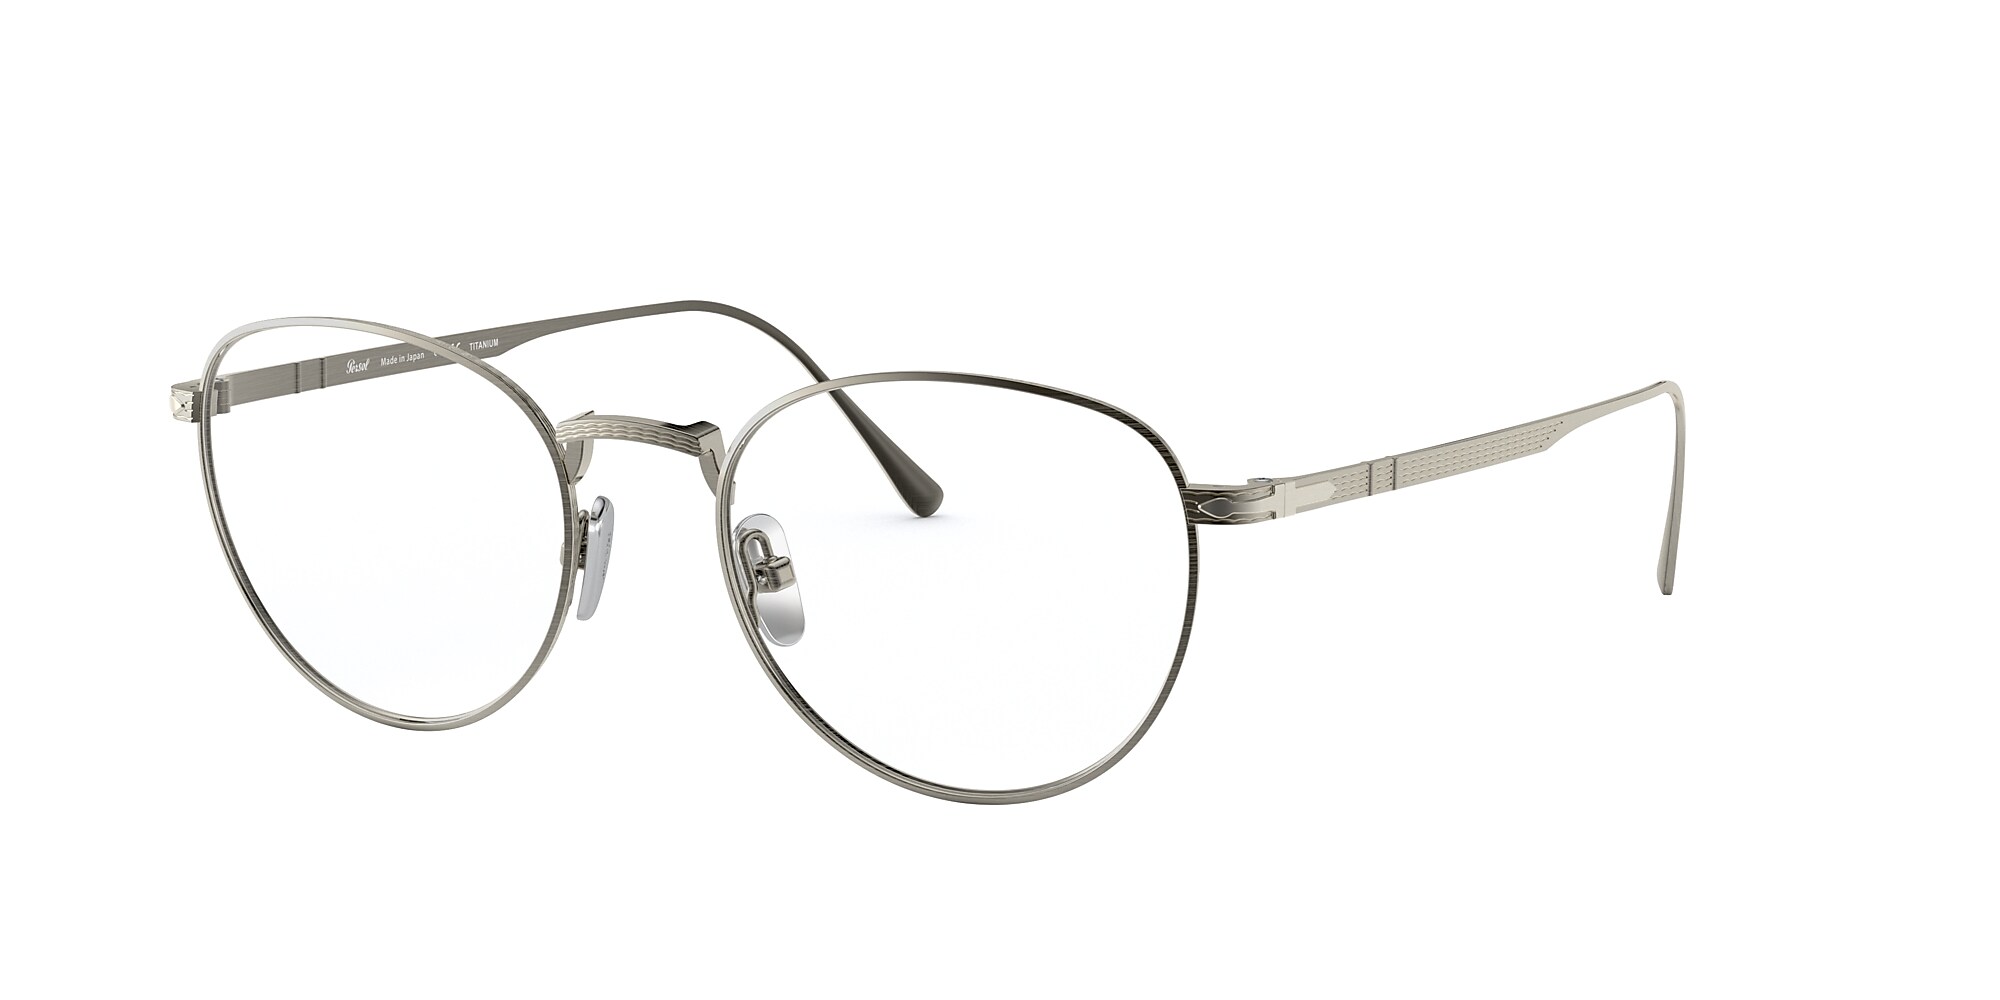 Eyeglasses PO5002VT - Pewter - Demo Lens - Titanium | Persol USA